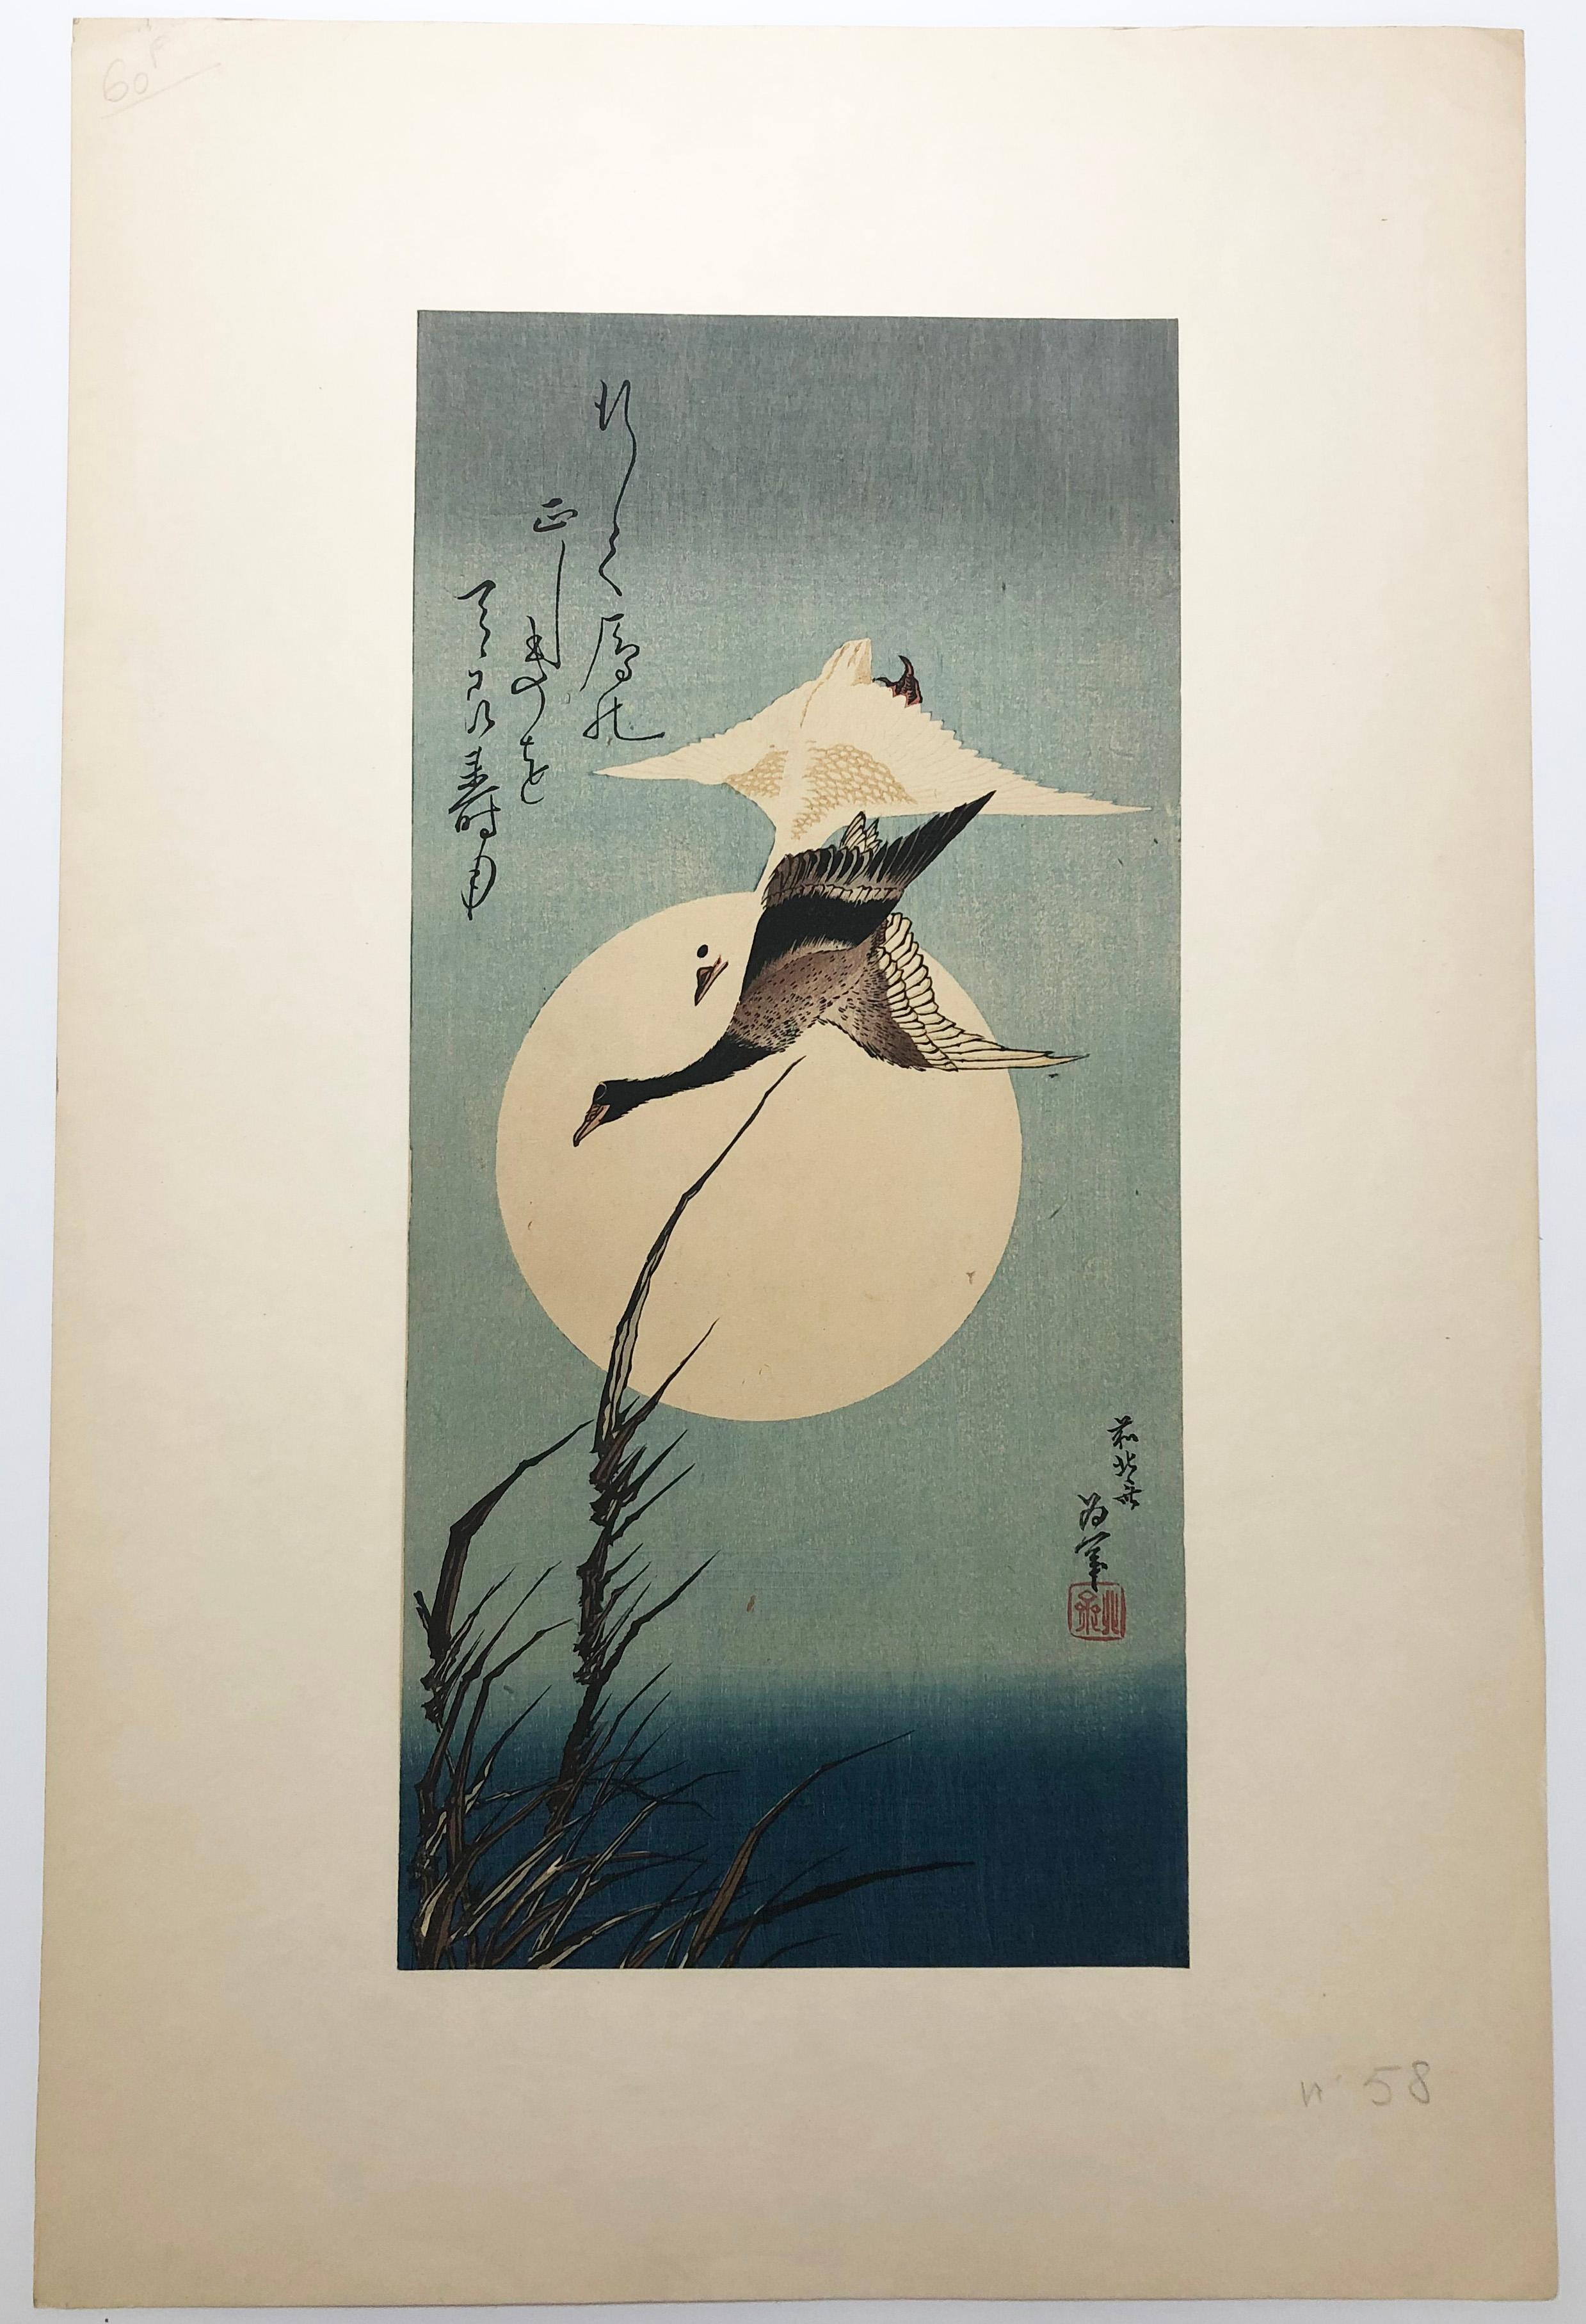 Deux canards volants devant la grande pleine lune. - Print by Katsushika Hokusai